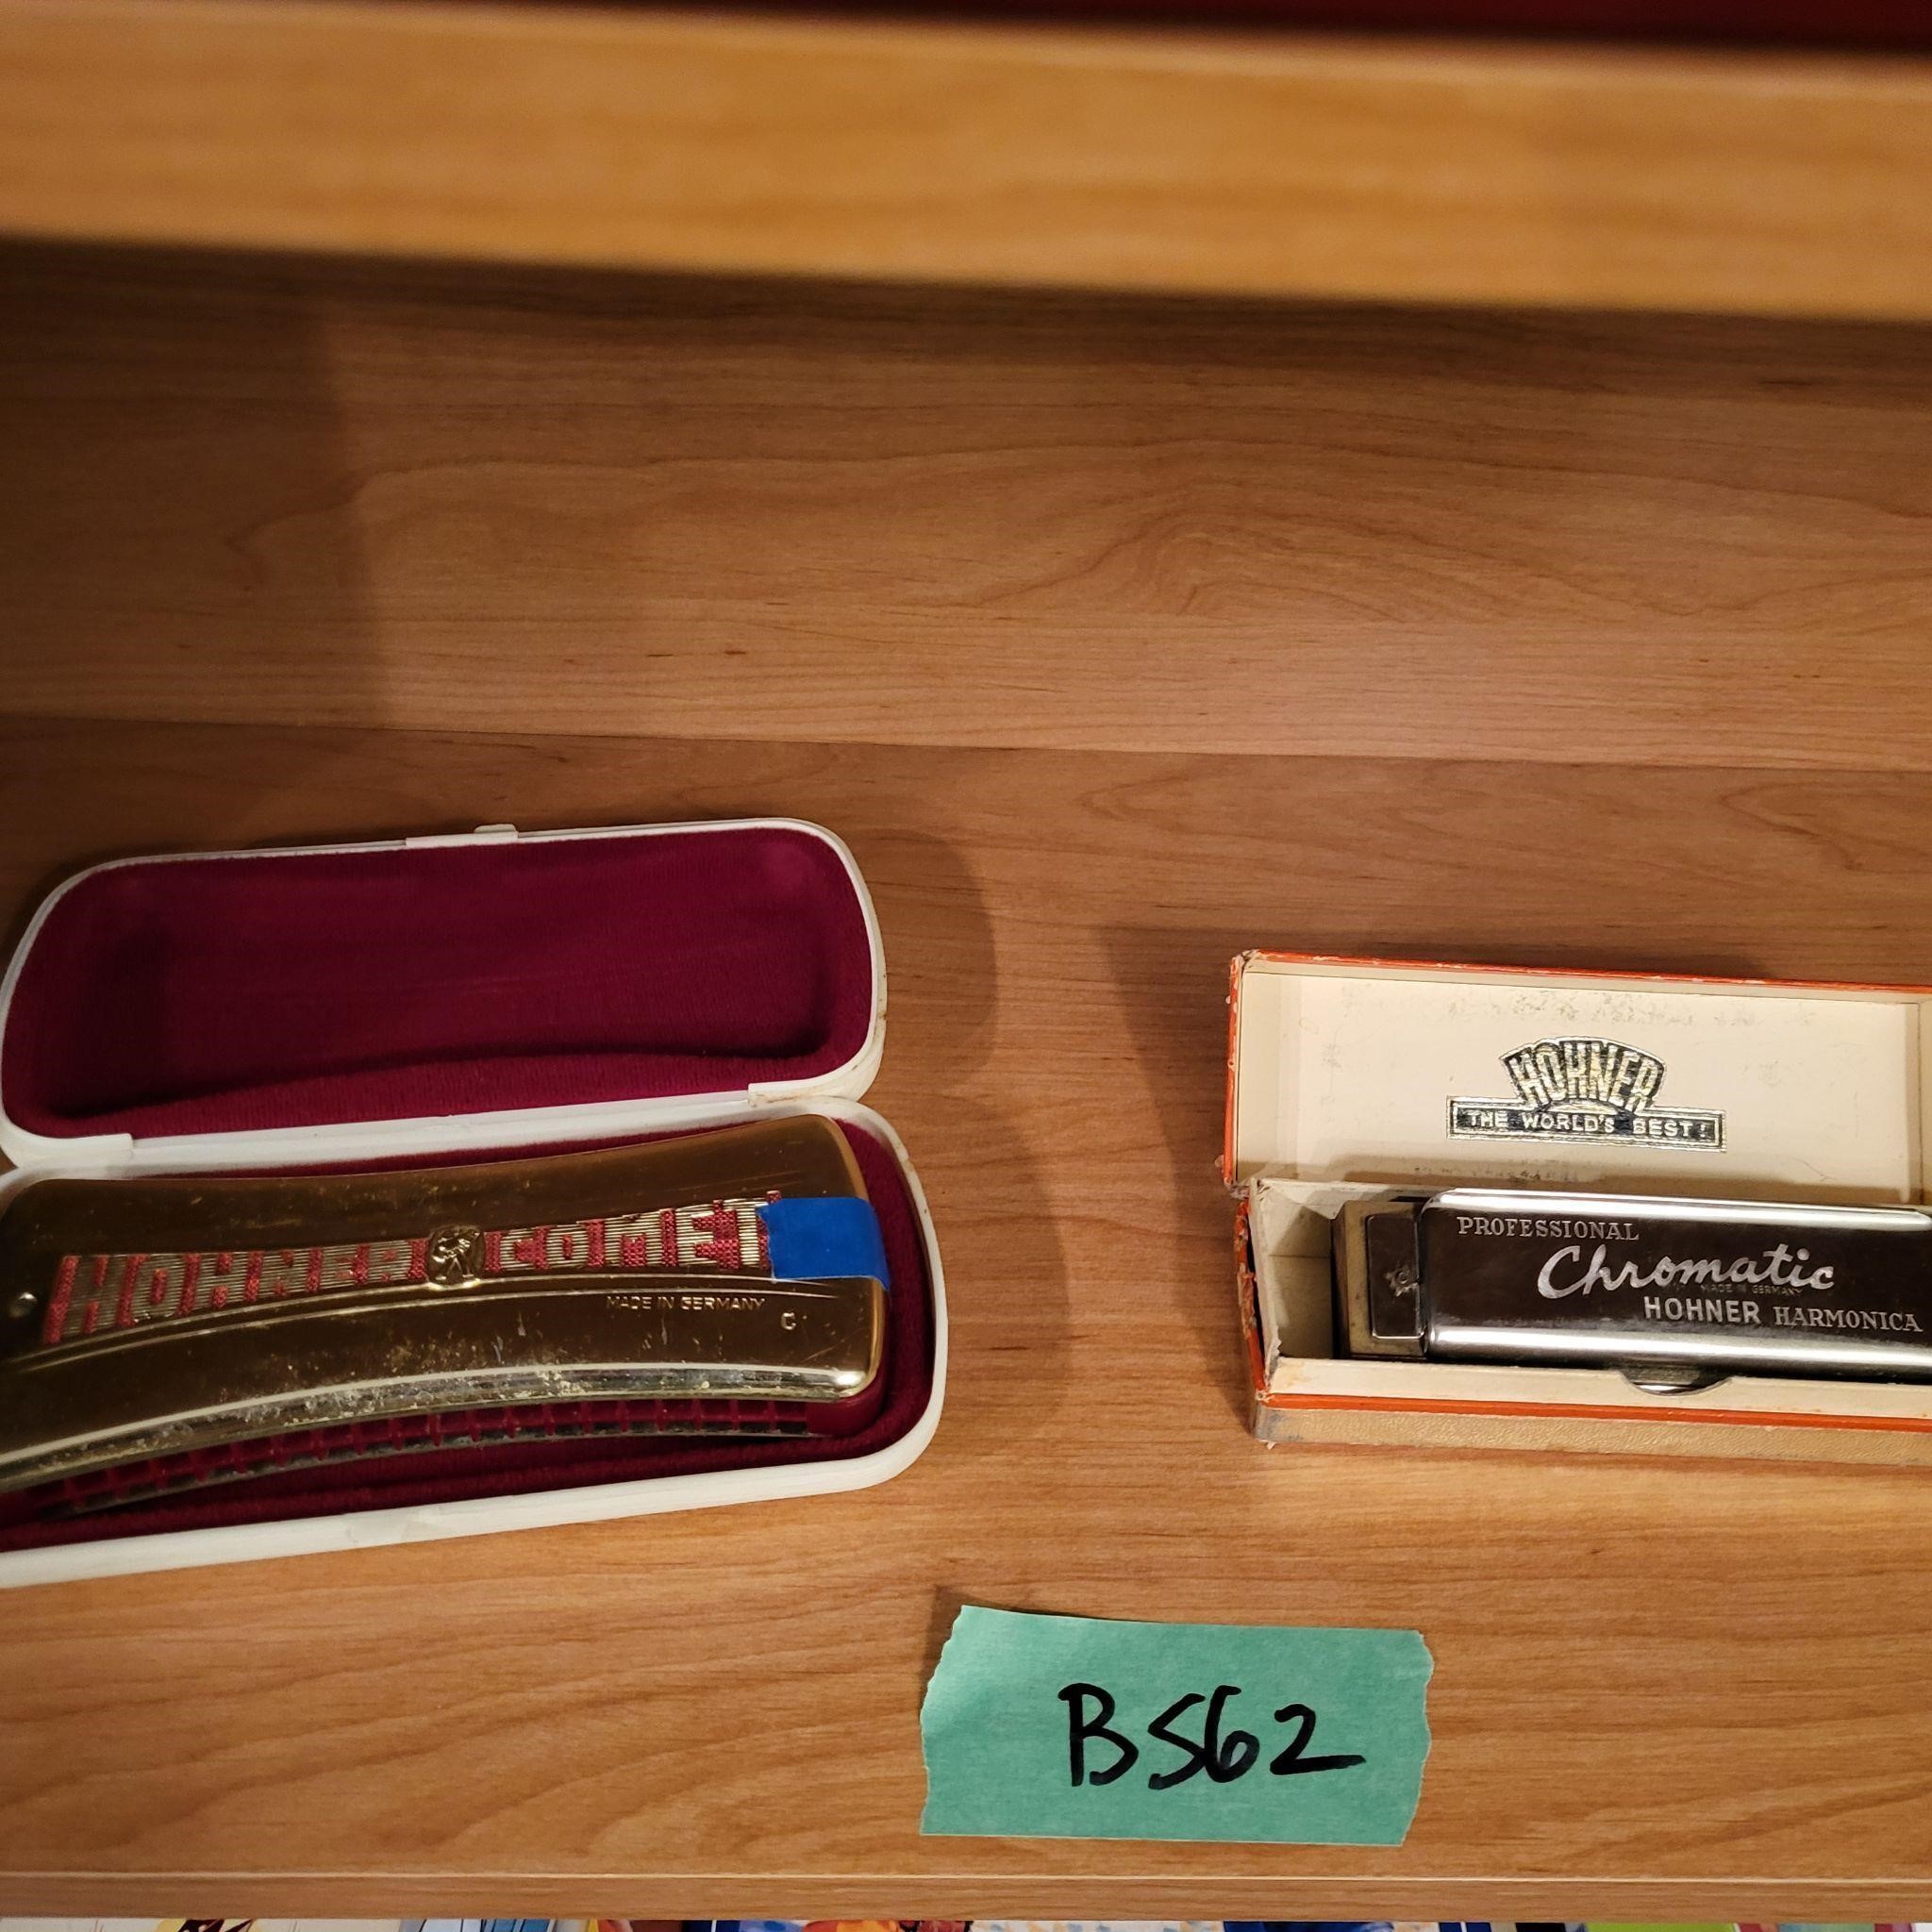 B562 Vintage harmonicas in cases